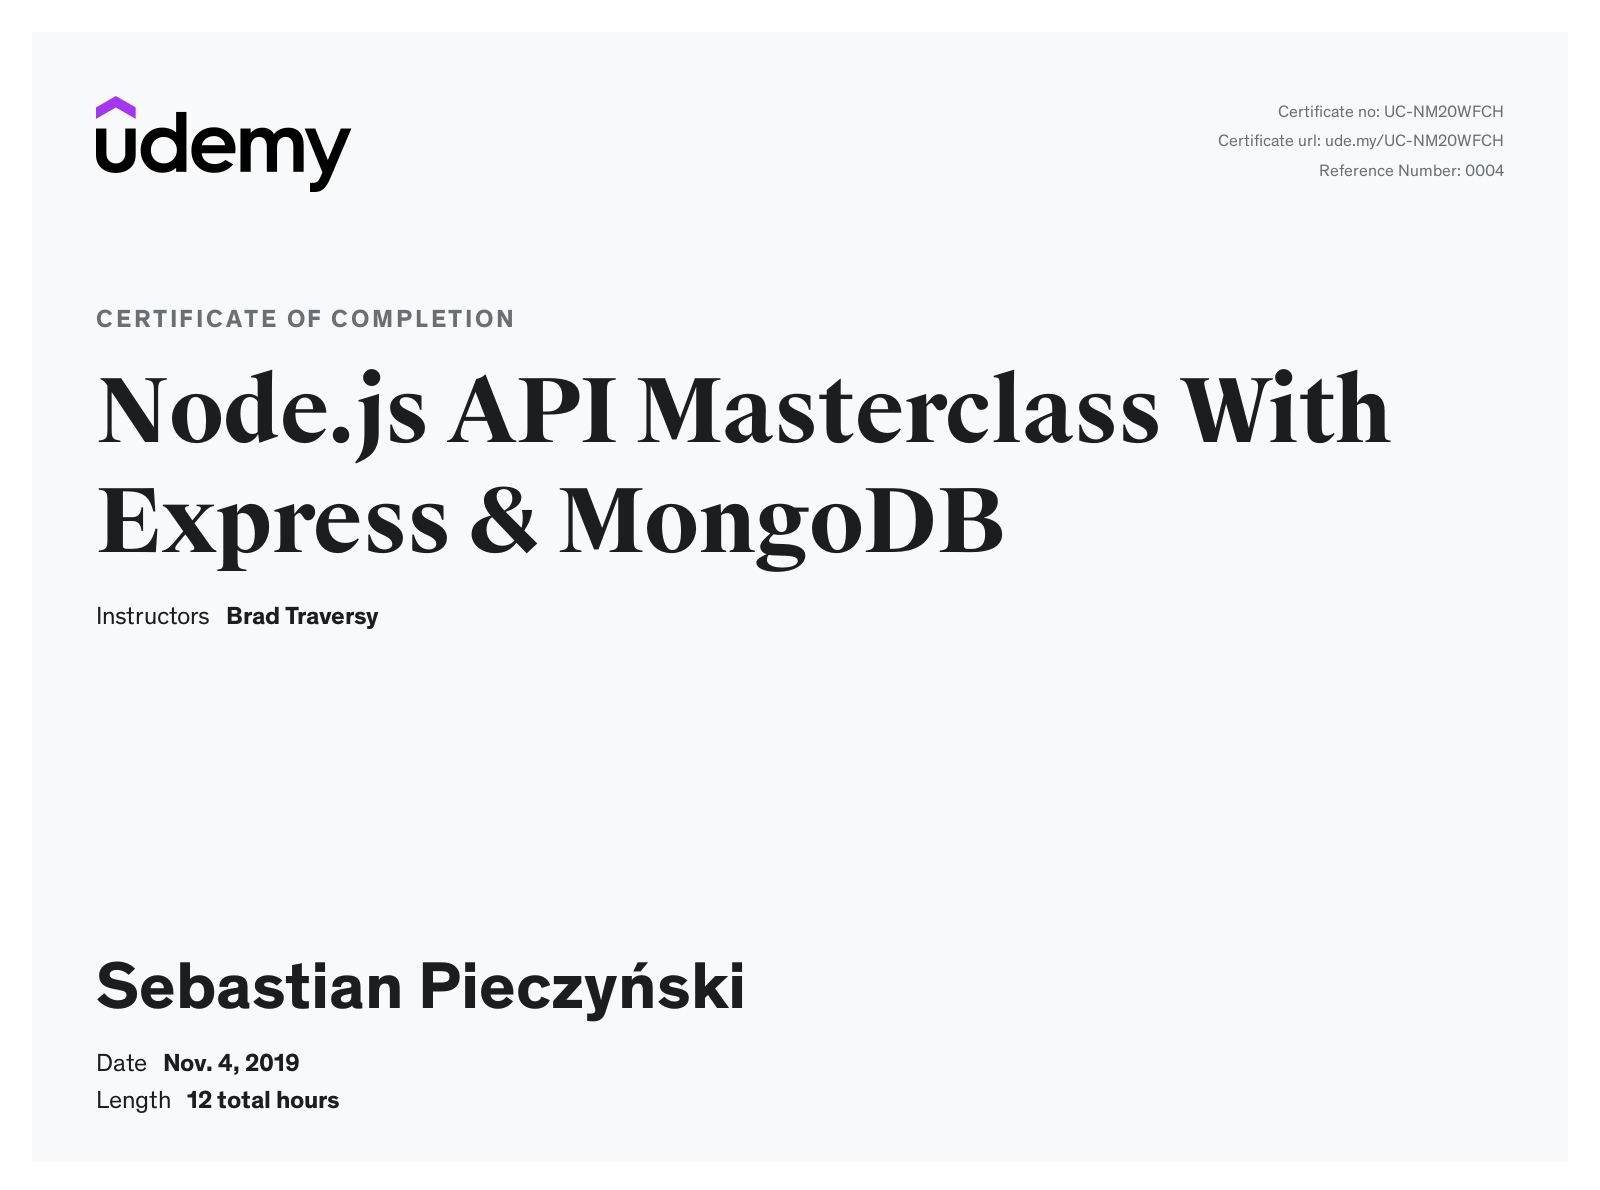 Node.js Masterclass with Express & MongoDB